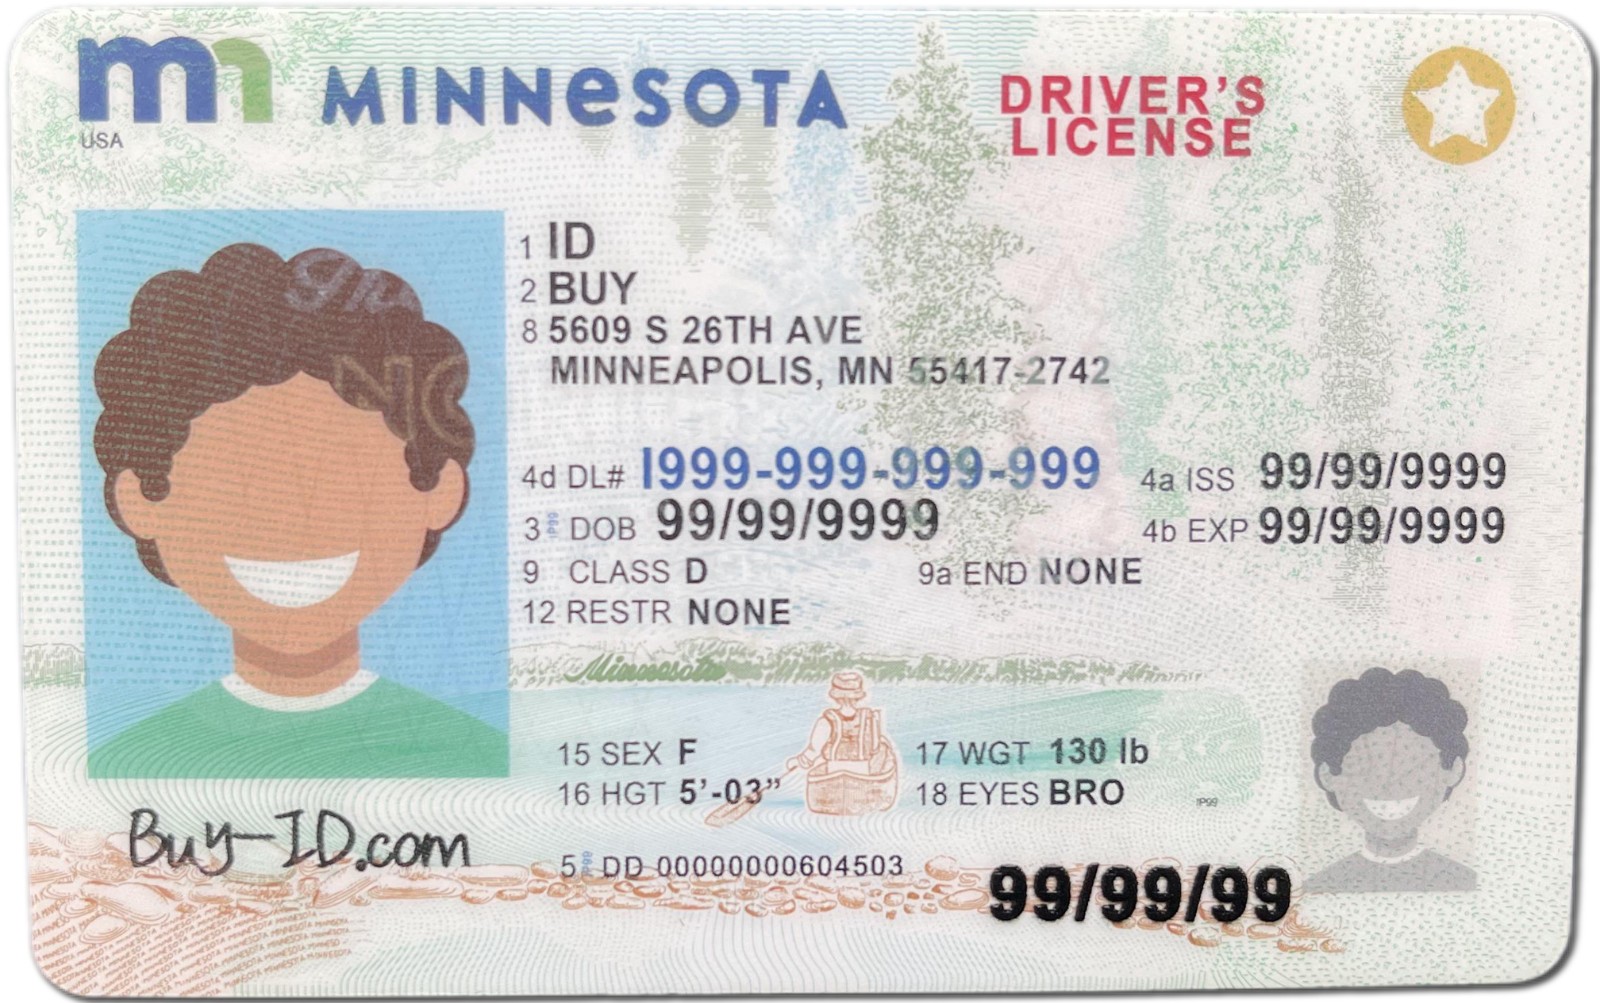 Minnesota ID-Buy-ID.com